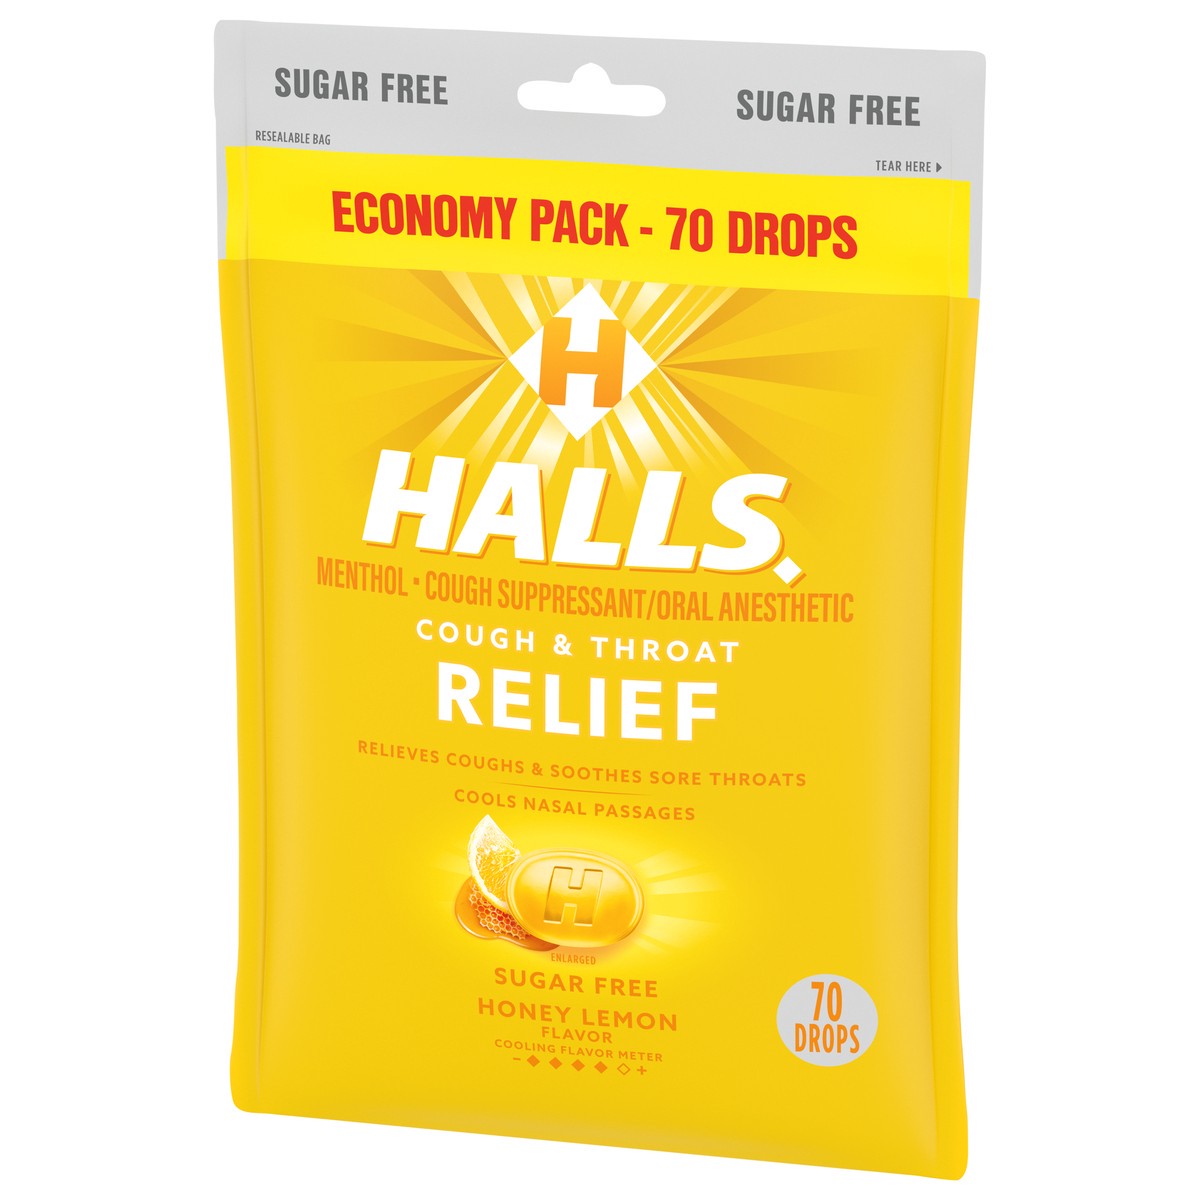 slide 3 of 8, HALLS Relief Honey Lemon Sugar Free Cough Drops, Economy Pack, 70 Drops, 7.66 oz